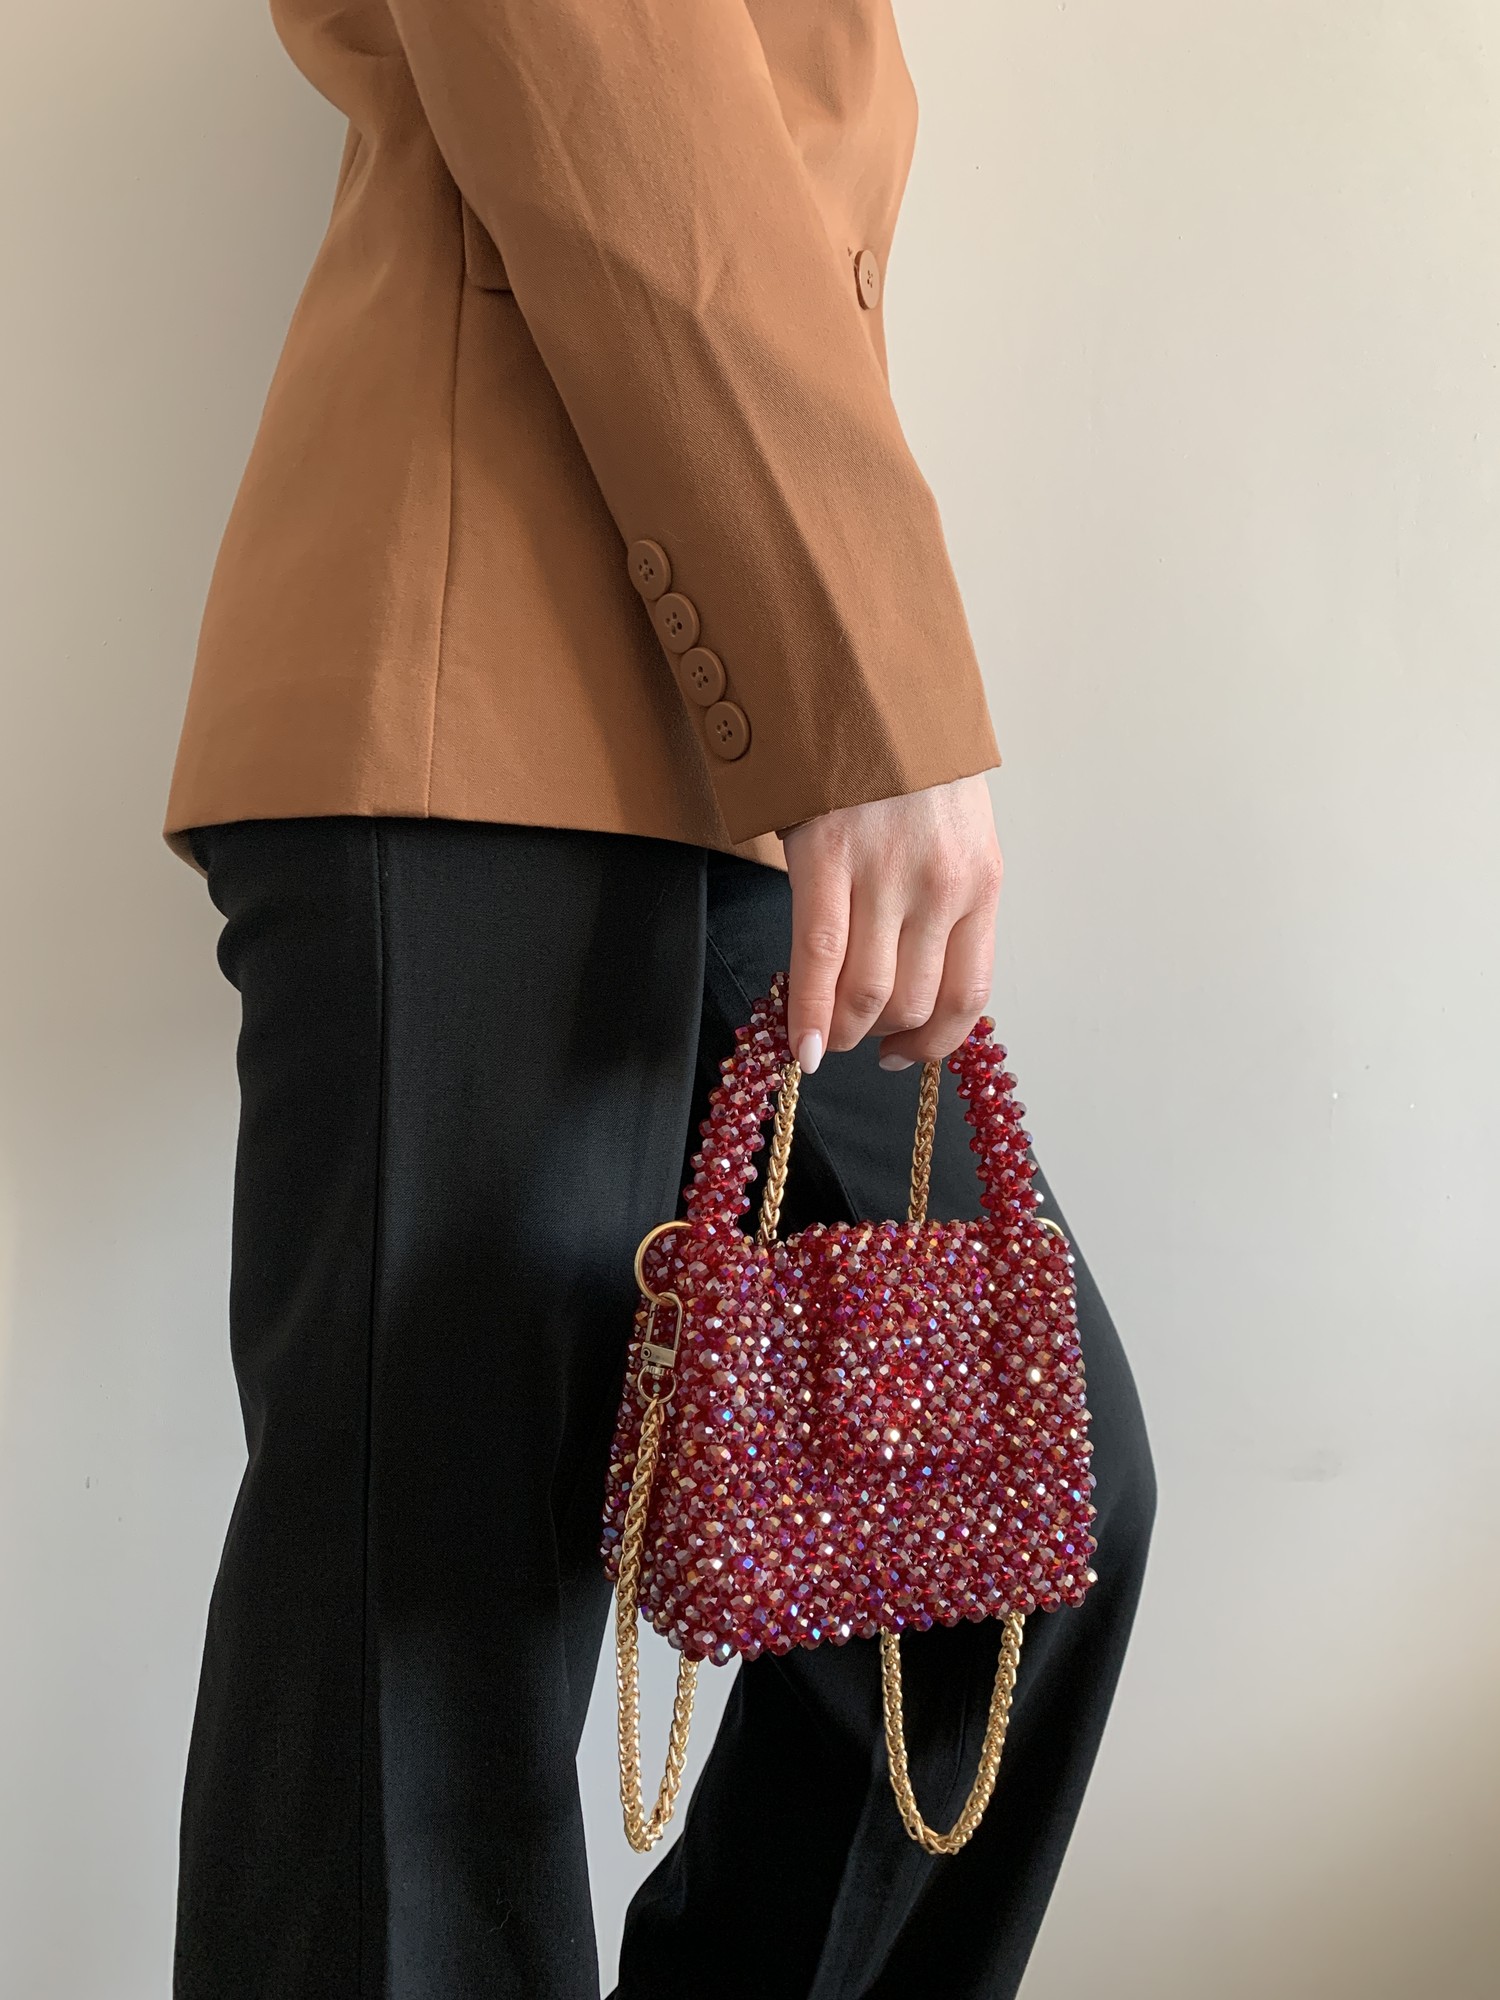 Bag made of bright burgundy beads